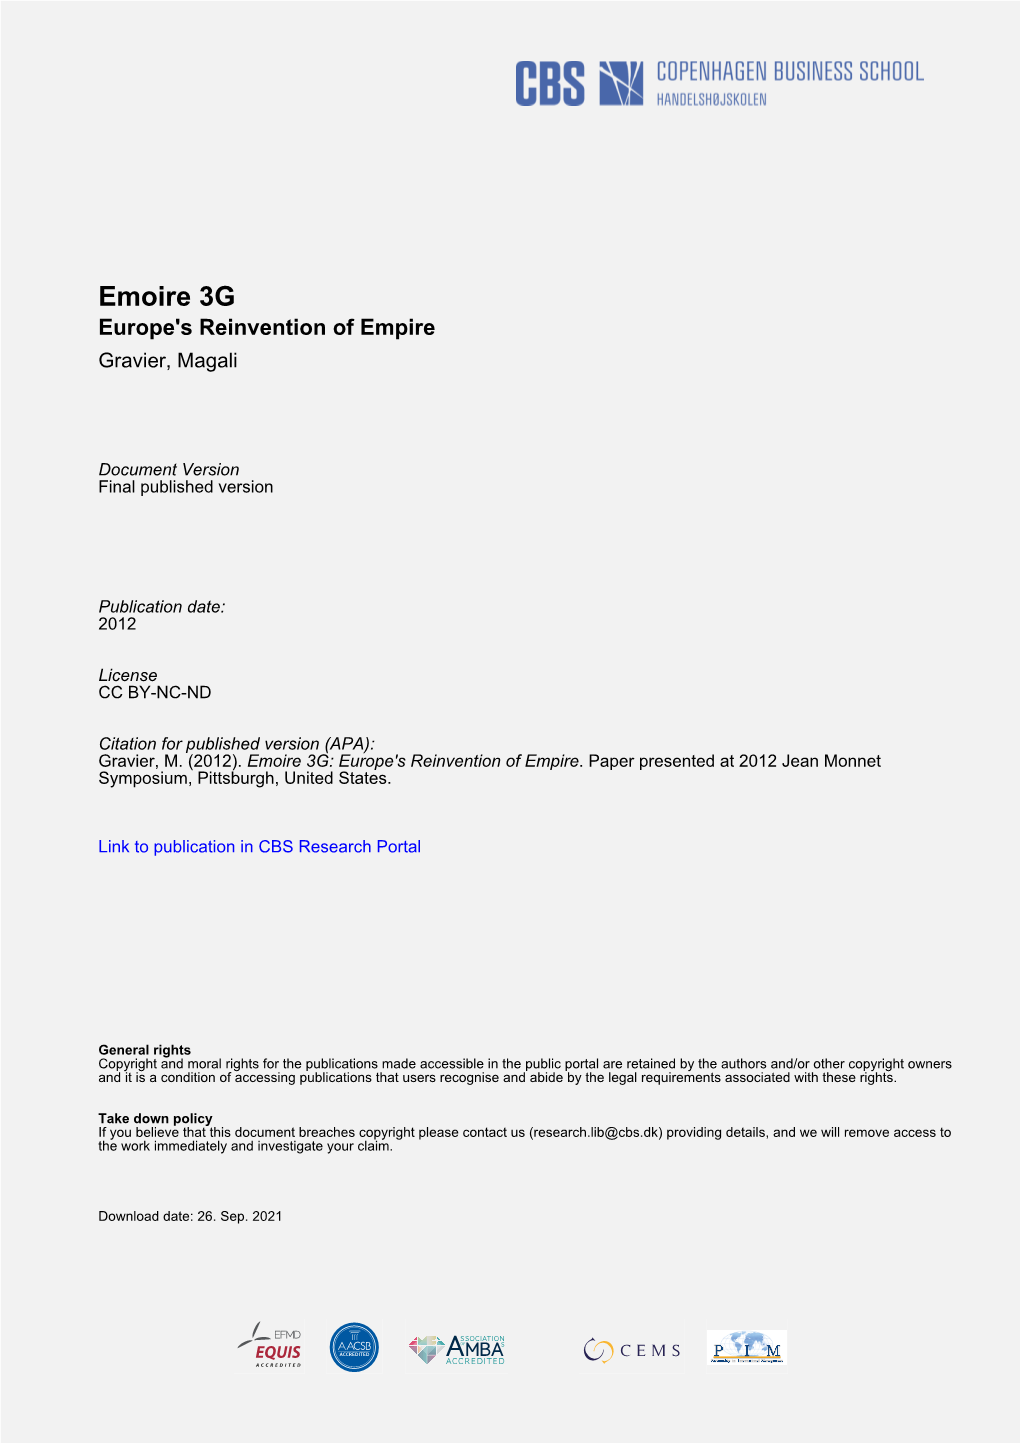 Gravier 2012 Empires3g